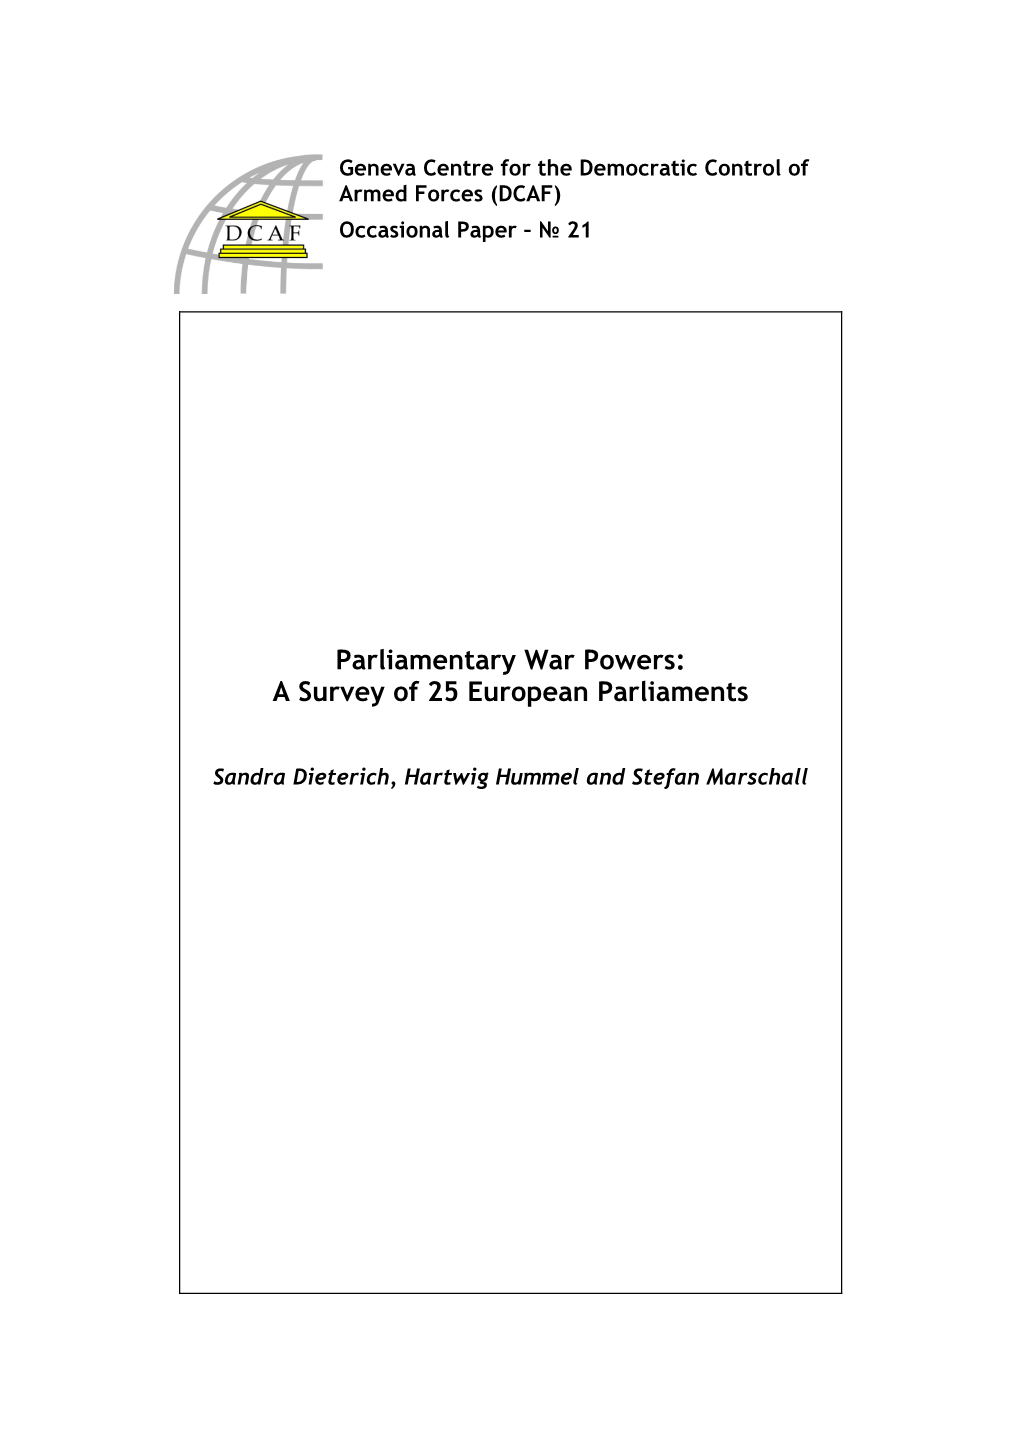 Parliamentary War Powers: a Survey of 25 European Parliaments